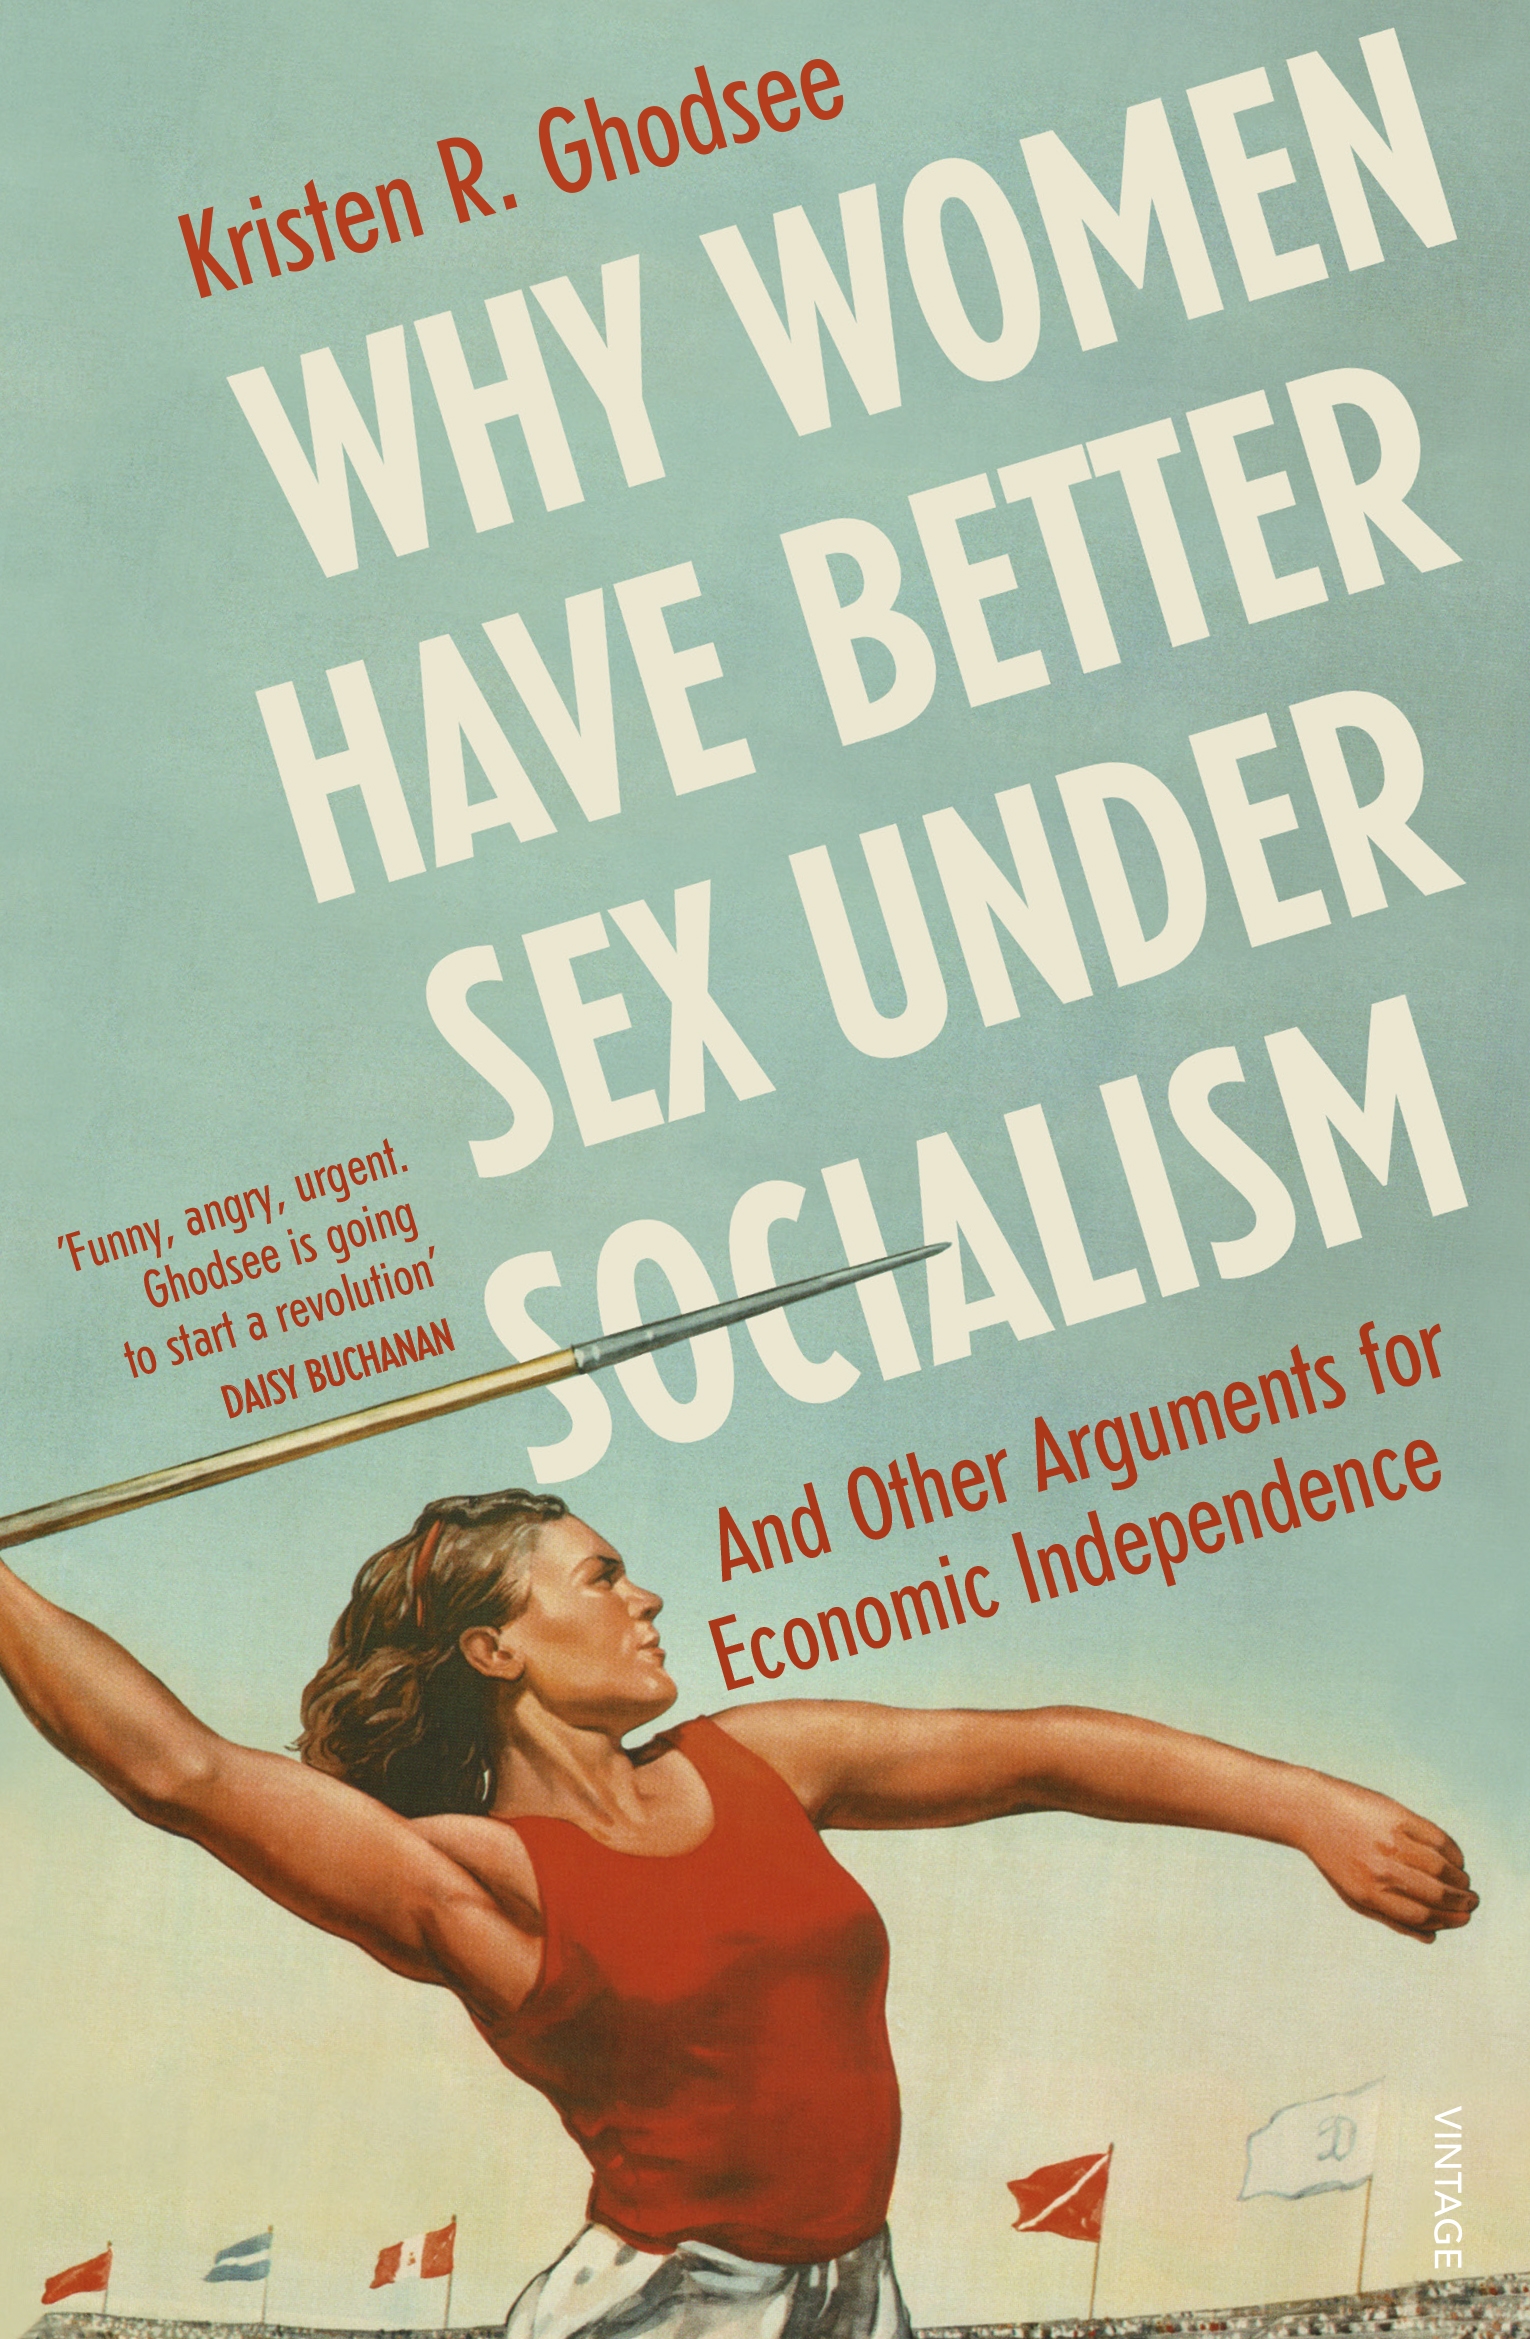 Why Women Have Better Sex Under Socialism By Kristen Ghodsee Penguin Books Australia